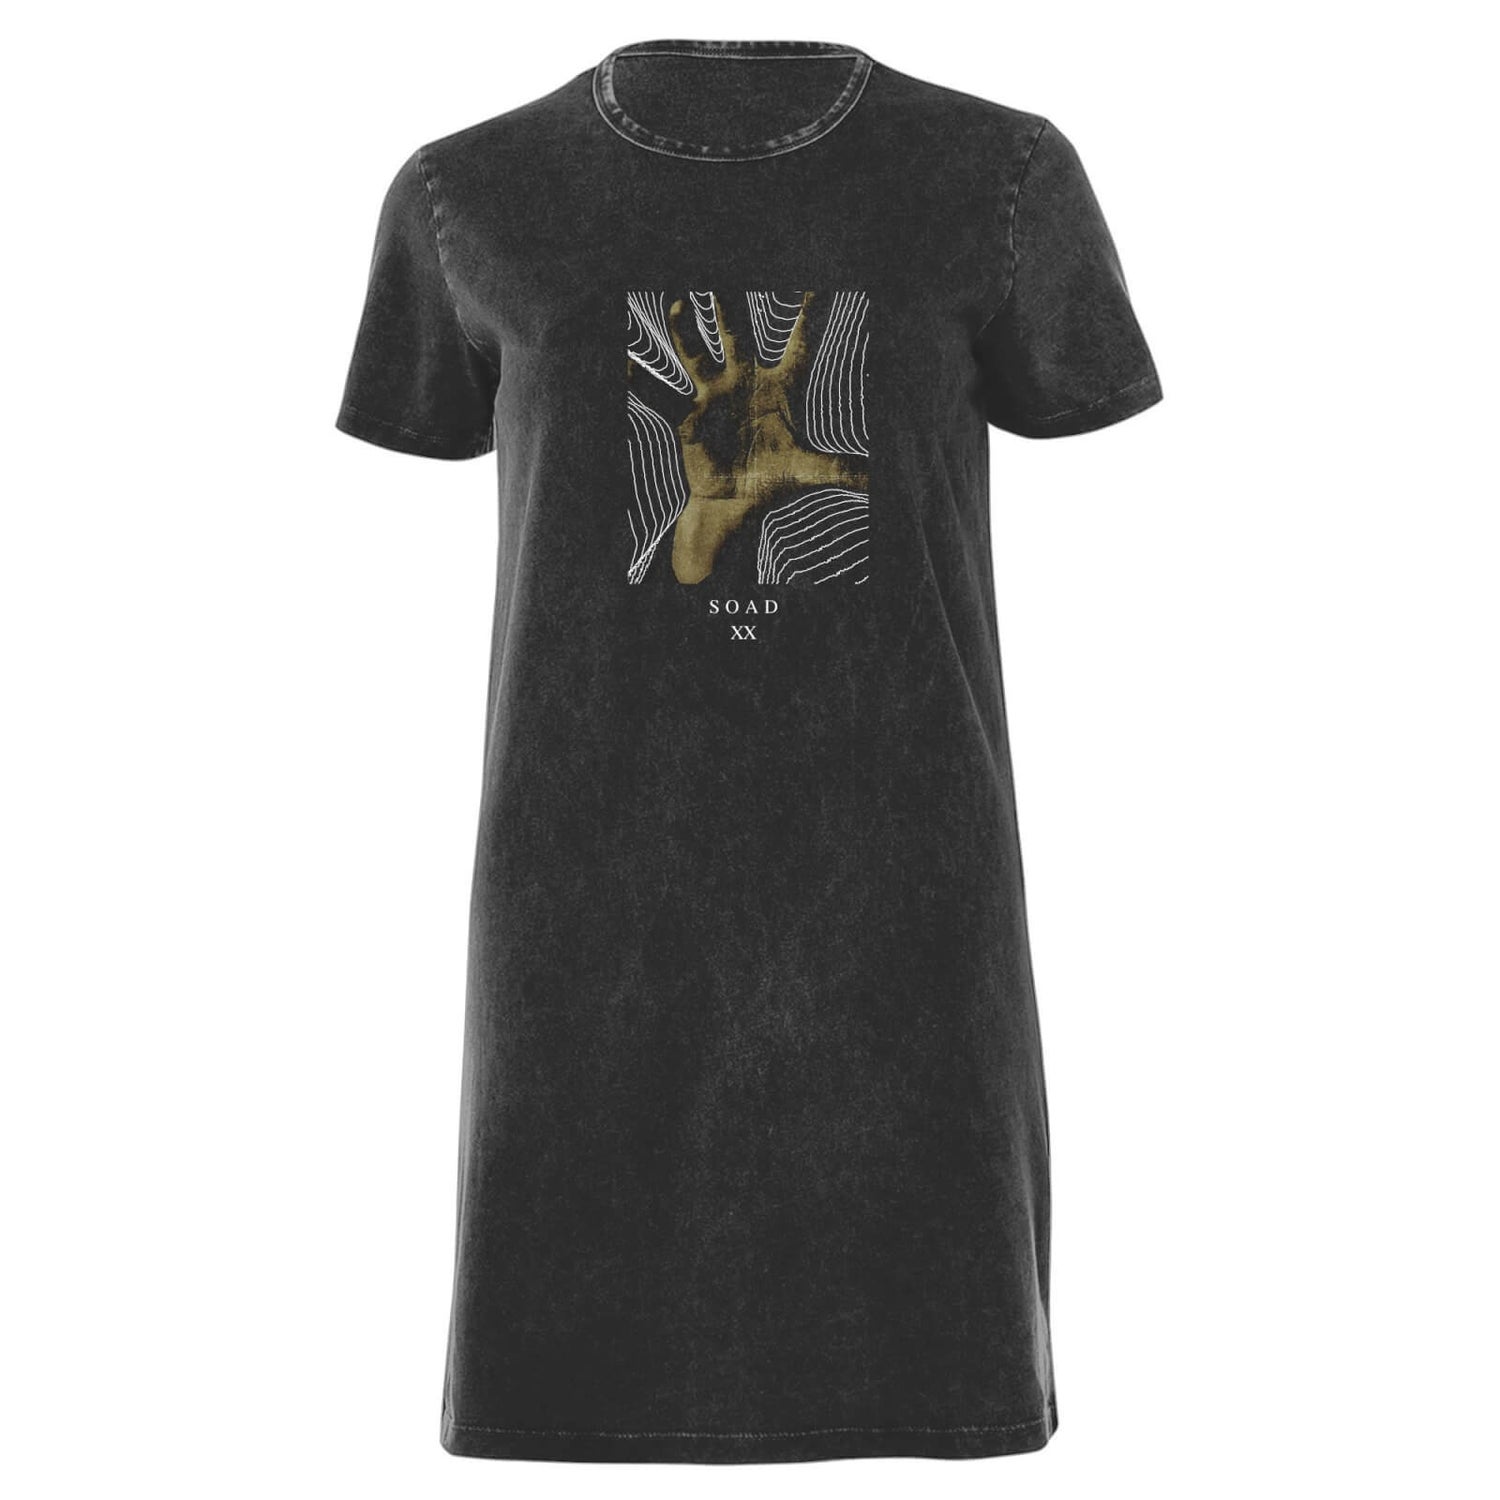 System Of A Down Hand Women's T-Shirt Dress - Black Acid Wash